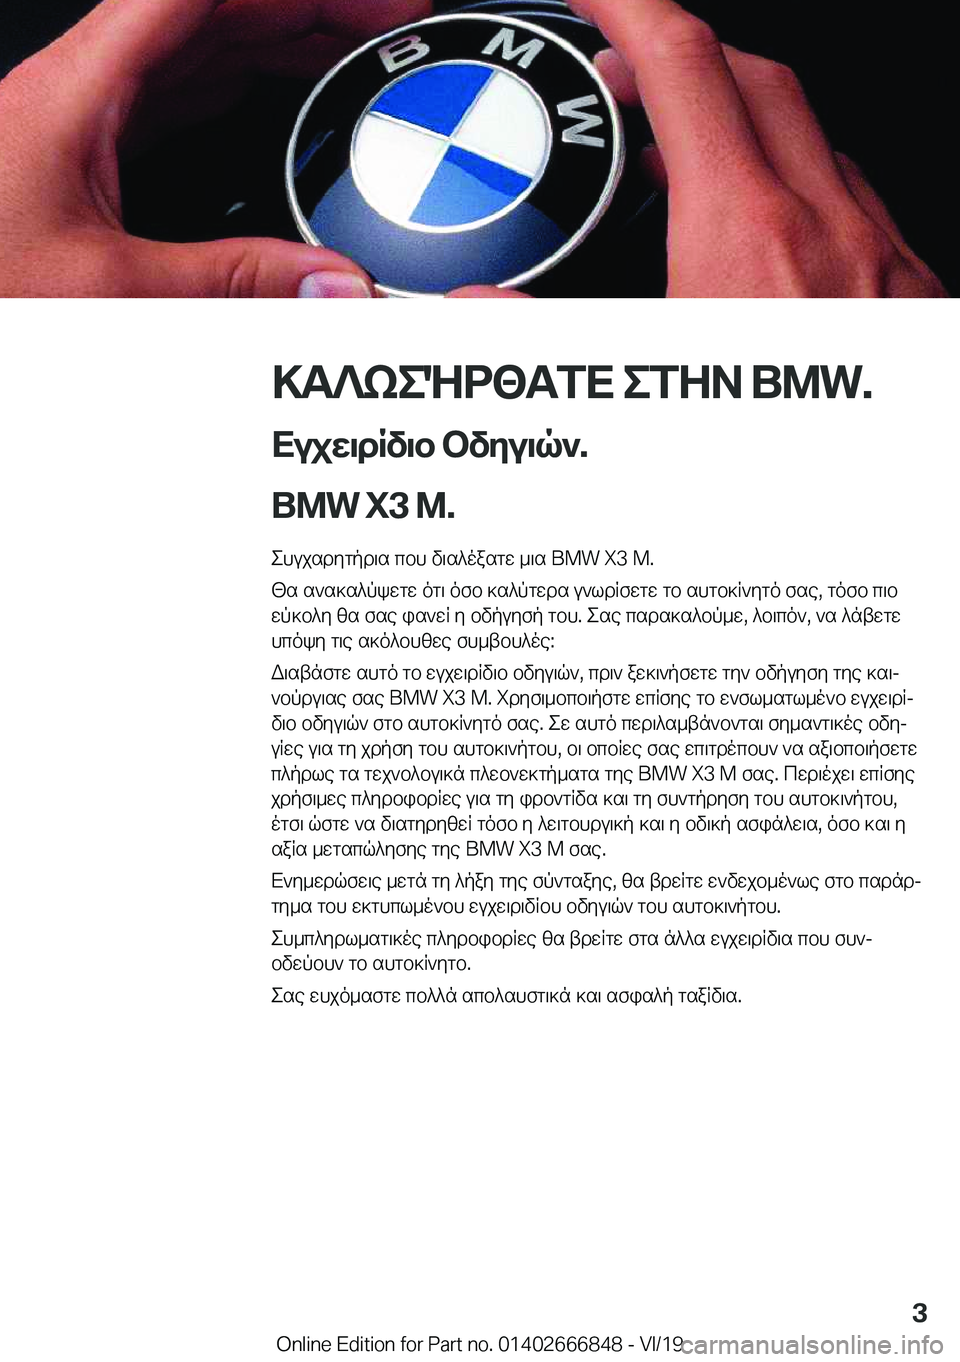 BMW X3 M 2020  ΟΔΗΓΌΣ ΧΡΉΣΗΣ (in Greek) >T?keNd<TfX�efZA��B�M�W�.
Xujw\dRv\b�bvyu\q`�.
�B�M�W��X�3��M�. ehujsdygpd\s�cbh�v\s^oasgw�_\s��B�M�W��X�3��M�.
<s�s`s]s^